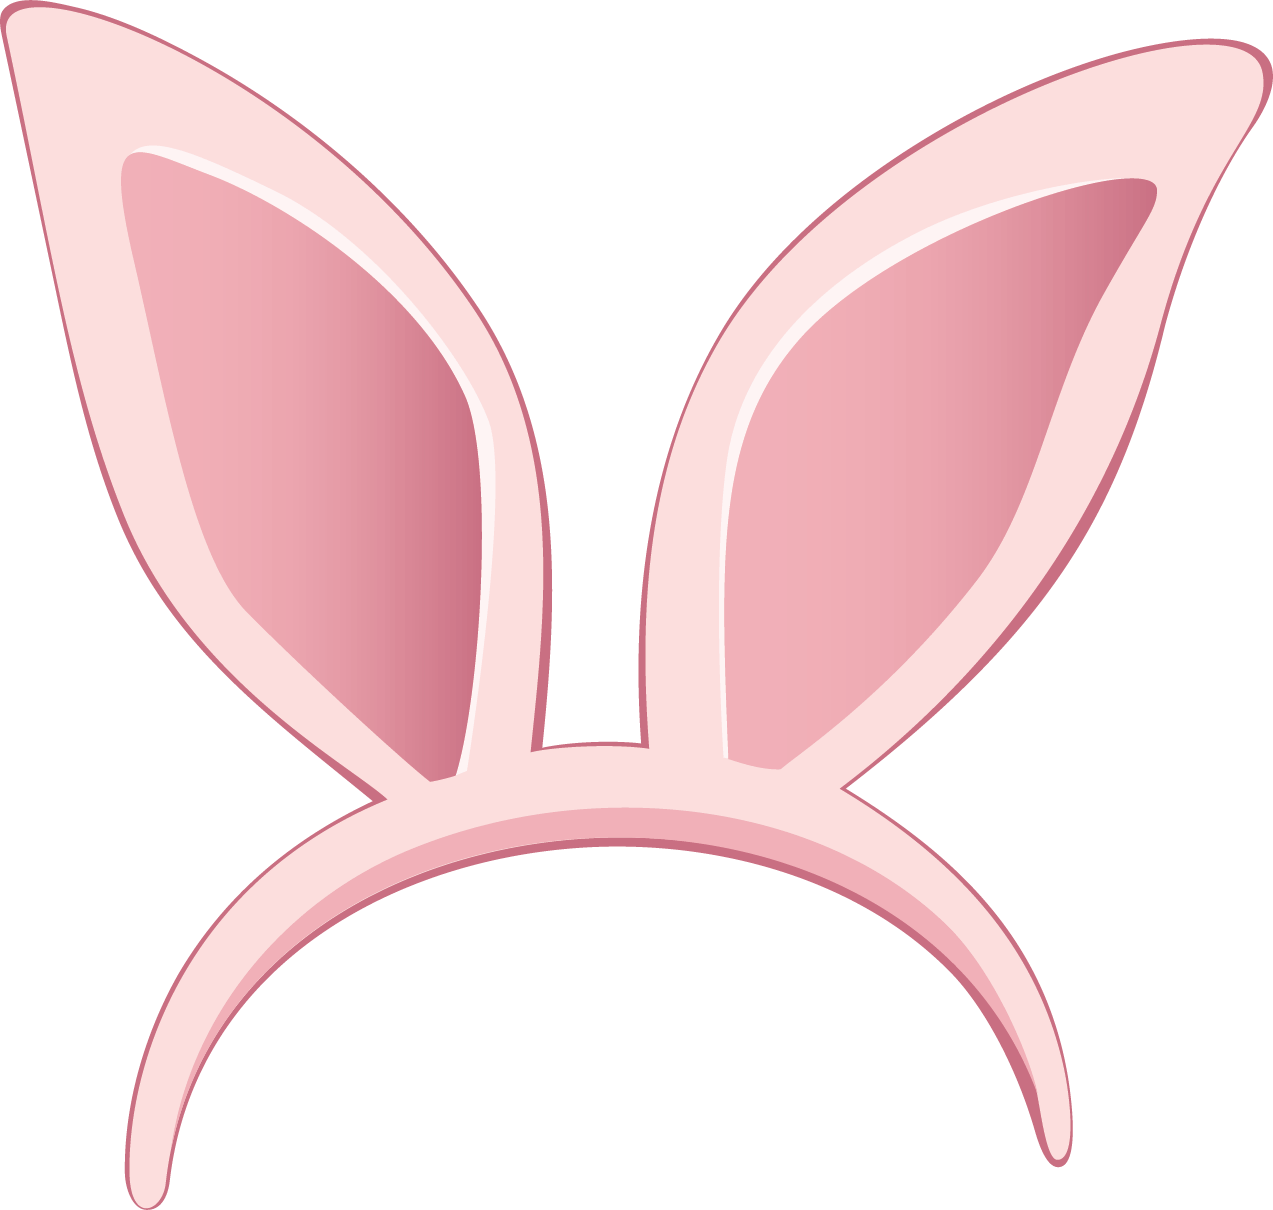 Bunny Ears PNG Photo Image